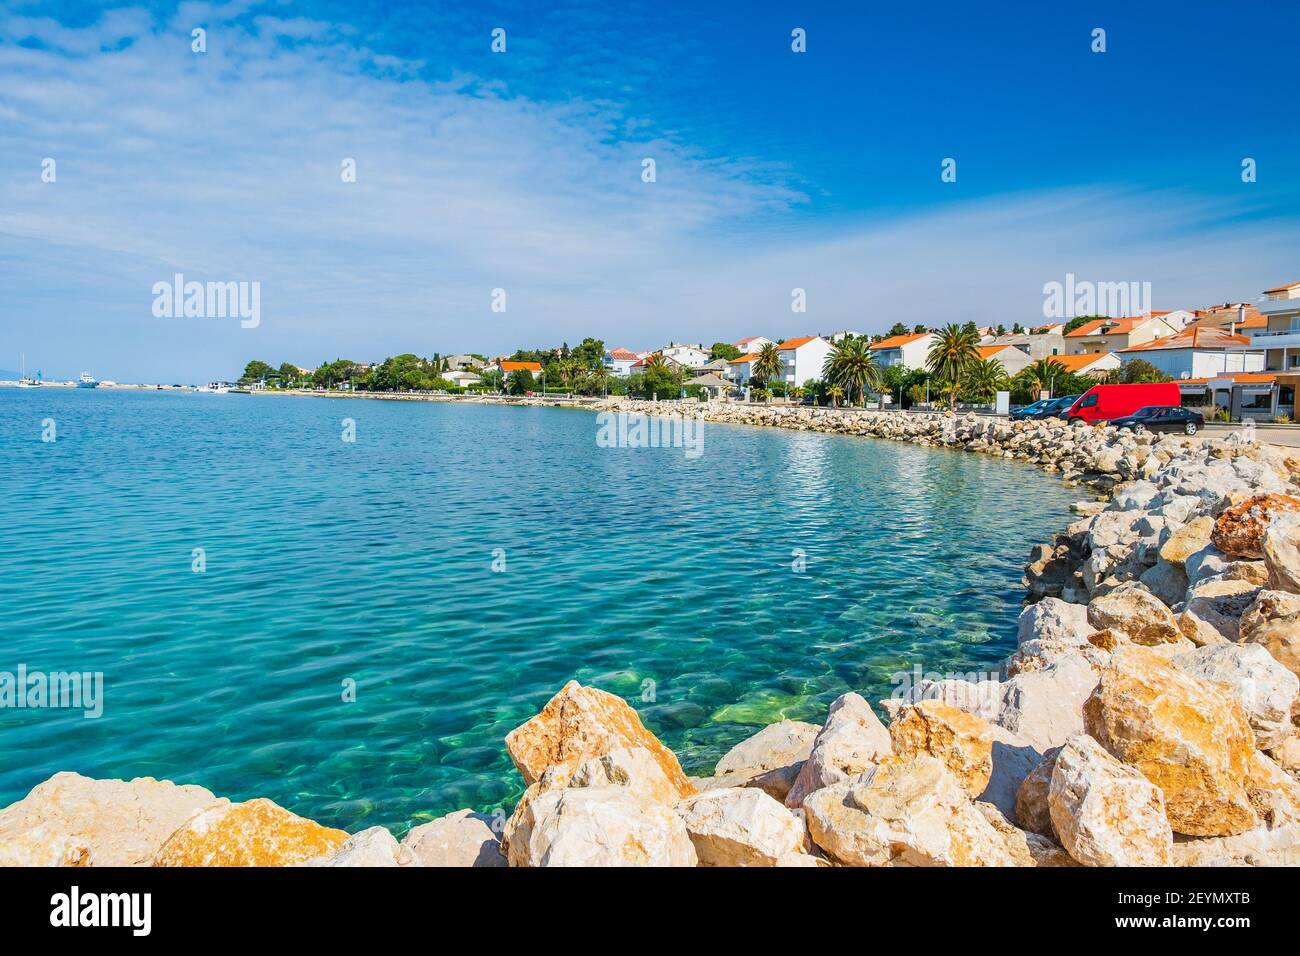 Town of Novalja on the island of Pag in Croatia, tourist destination on Adriatic sea Stock Photo